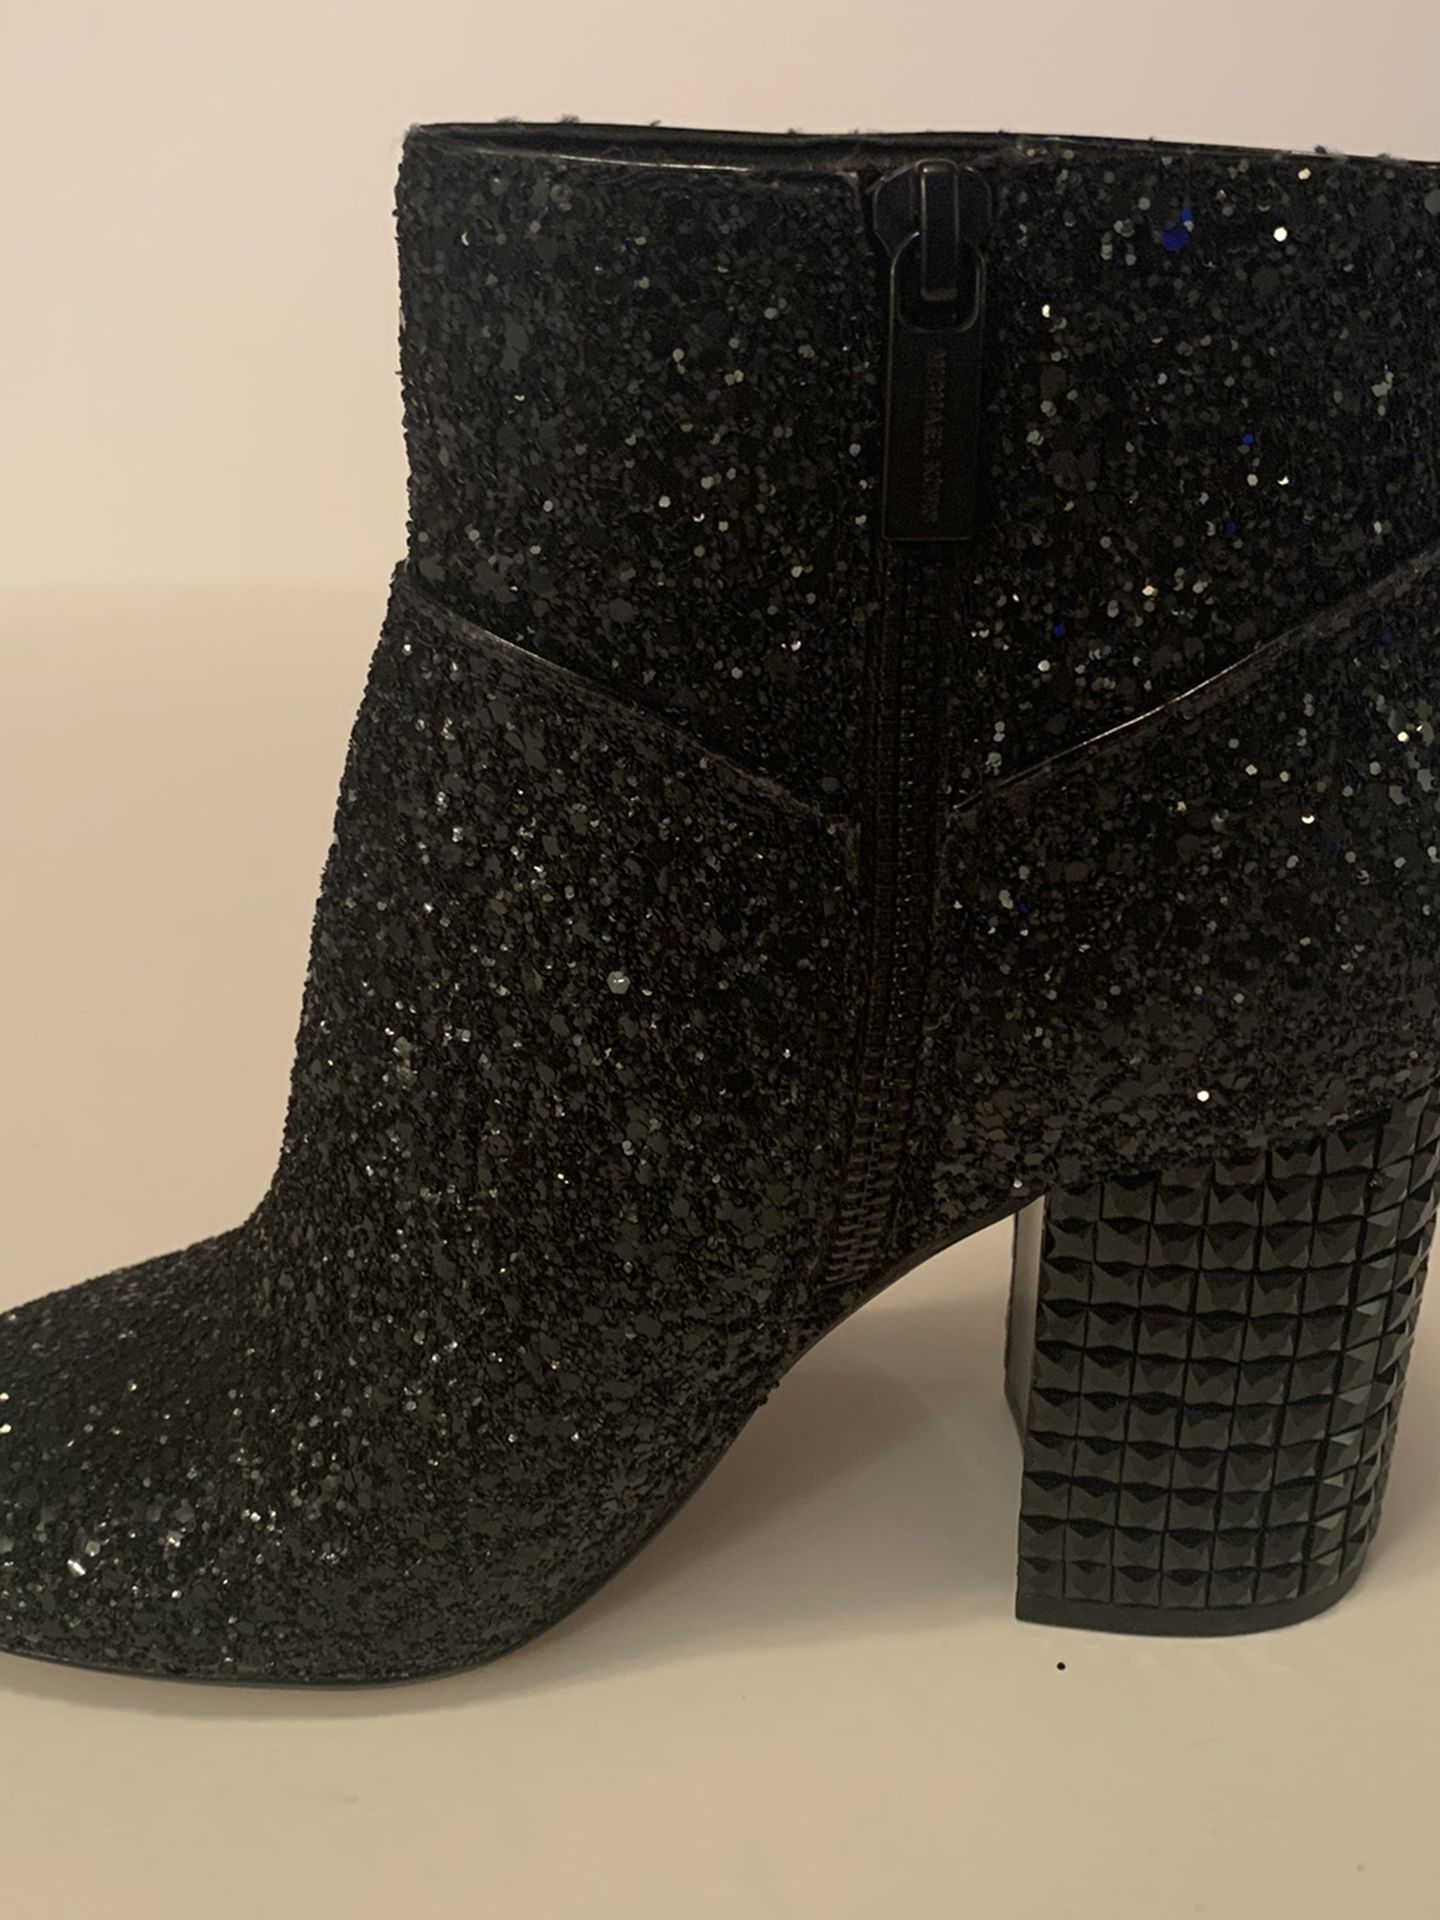 Michael Kors Women’s Black Arabella Ankle Boot Glitter Fabric Size 5